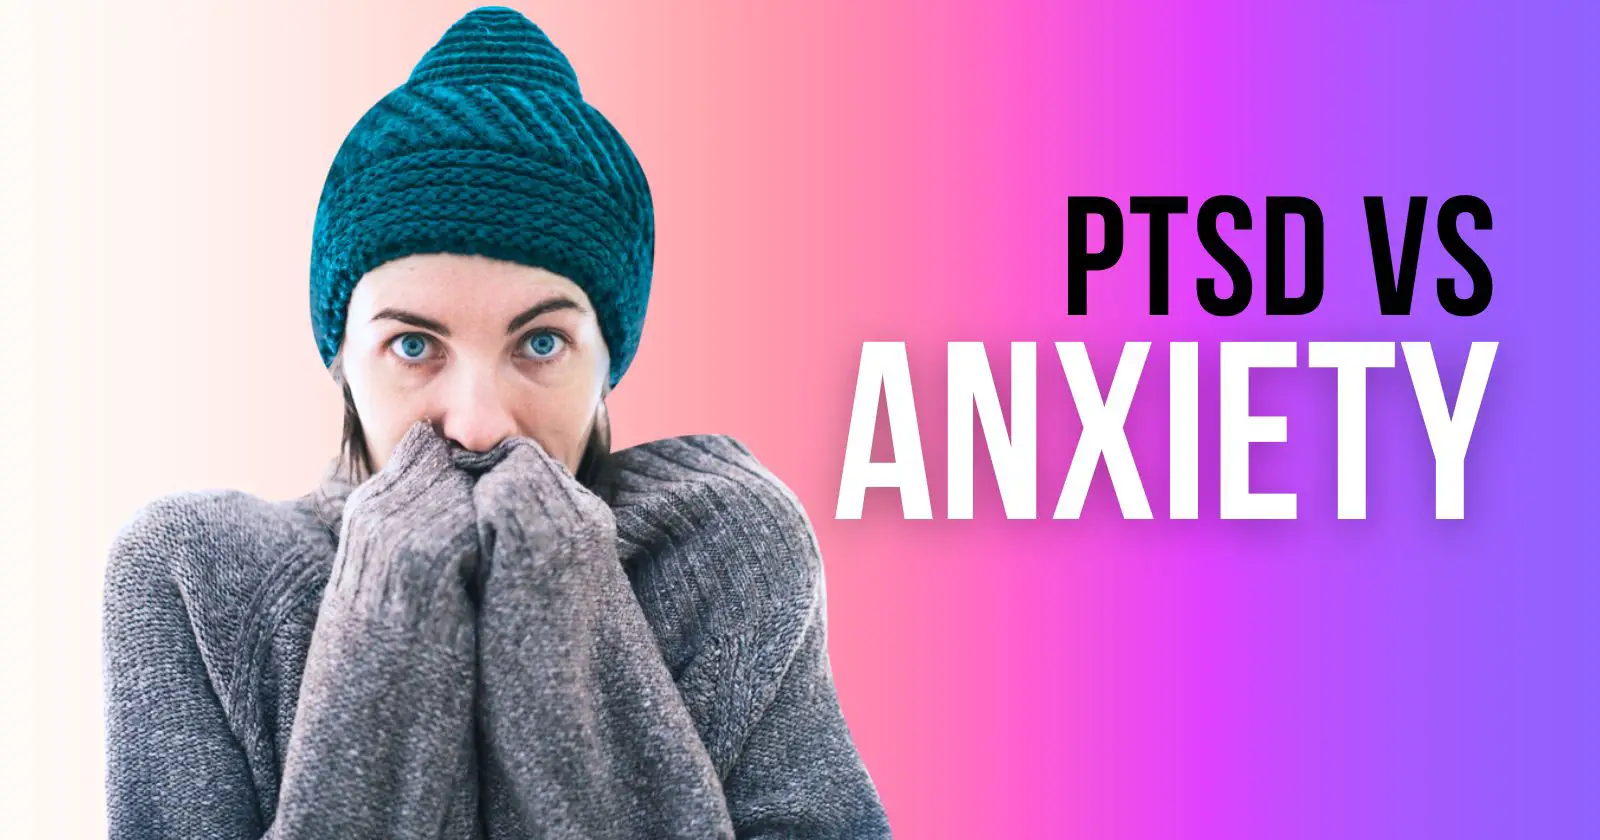 PTSD vs Anxiety